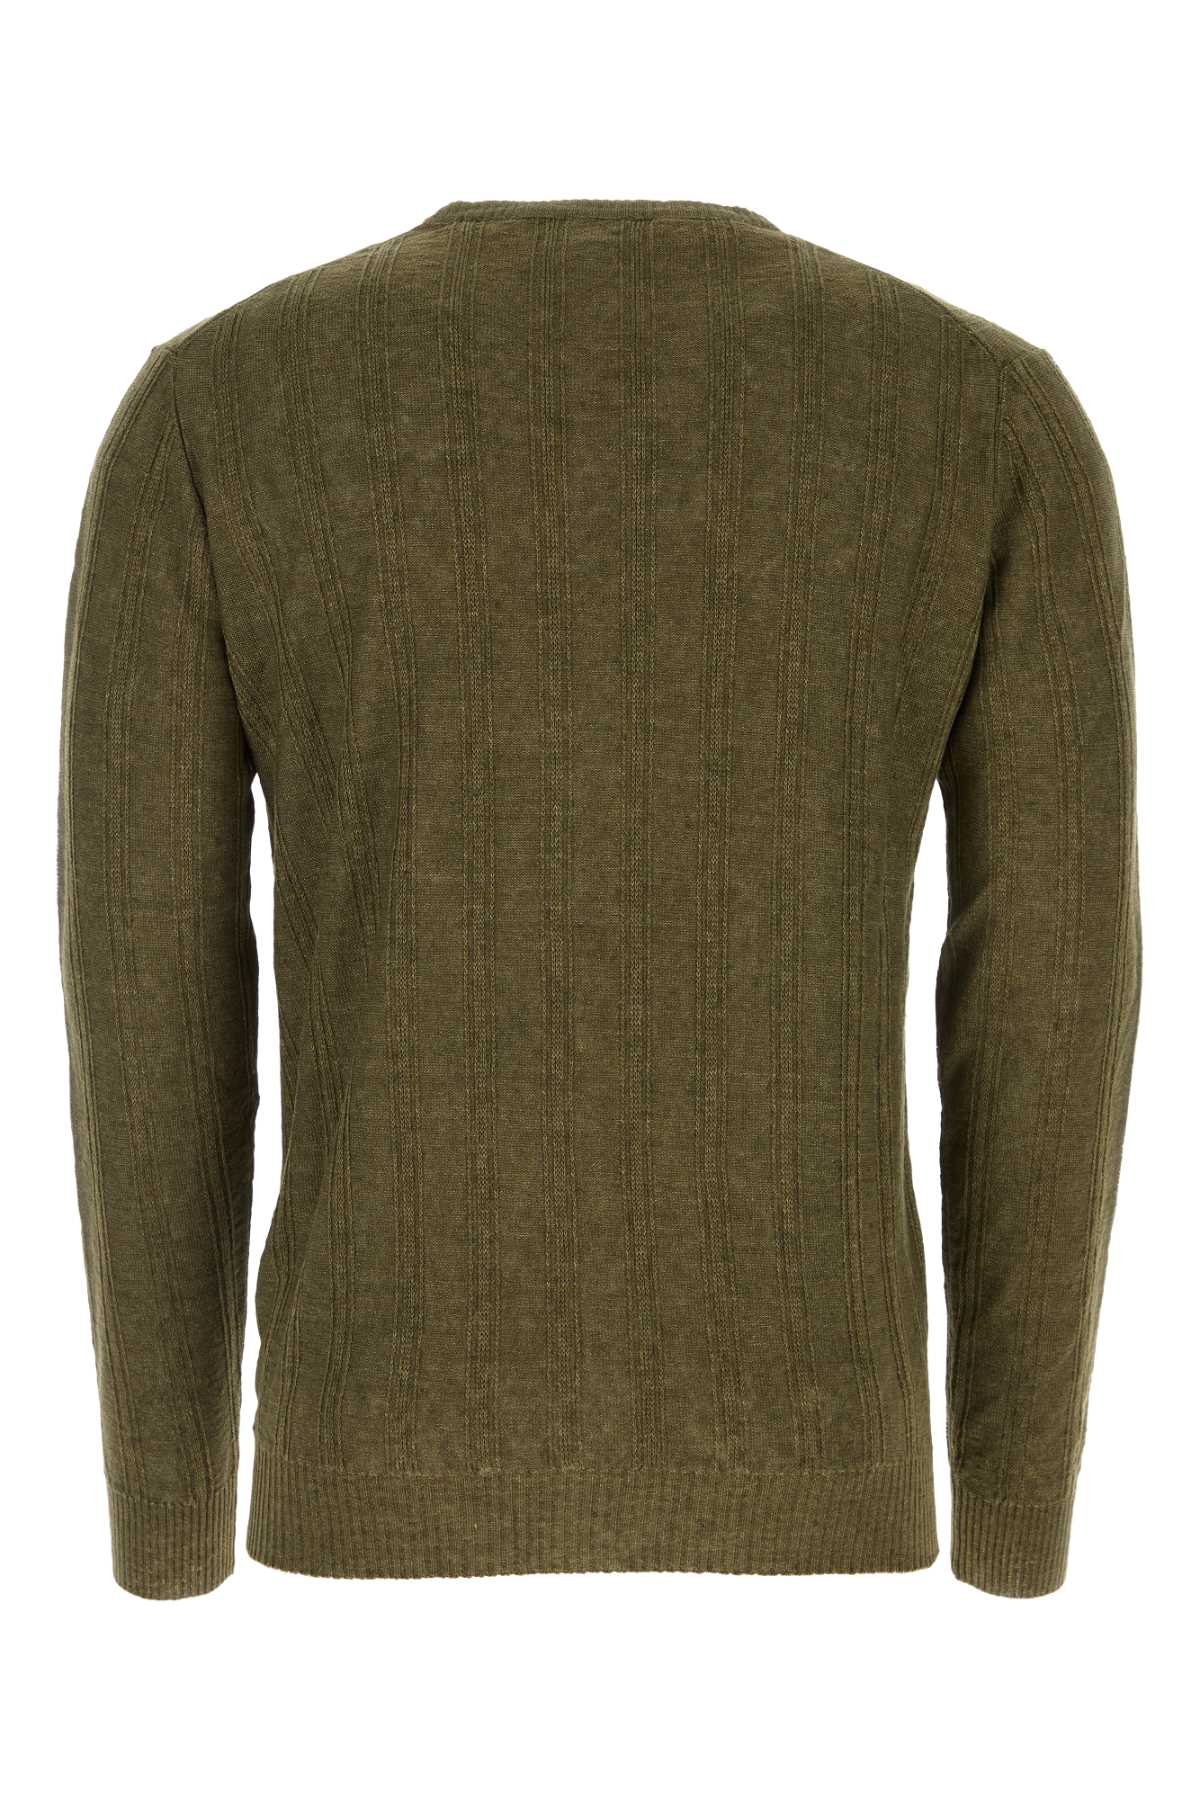 Aspesi Military Green Linen Sweater In 01260